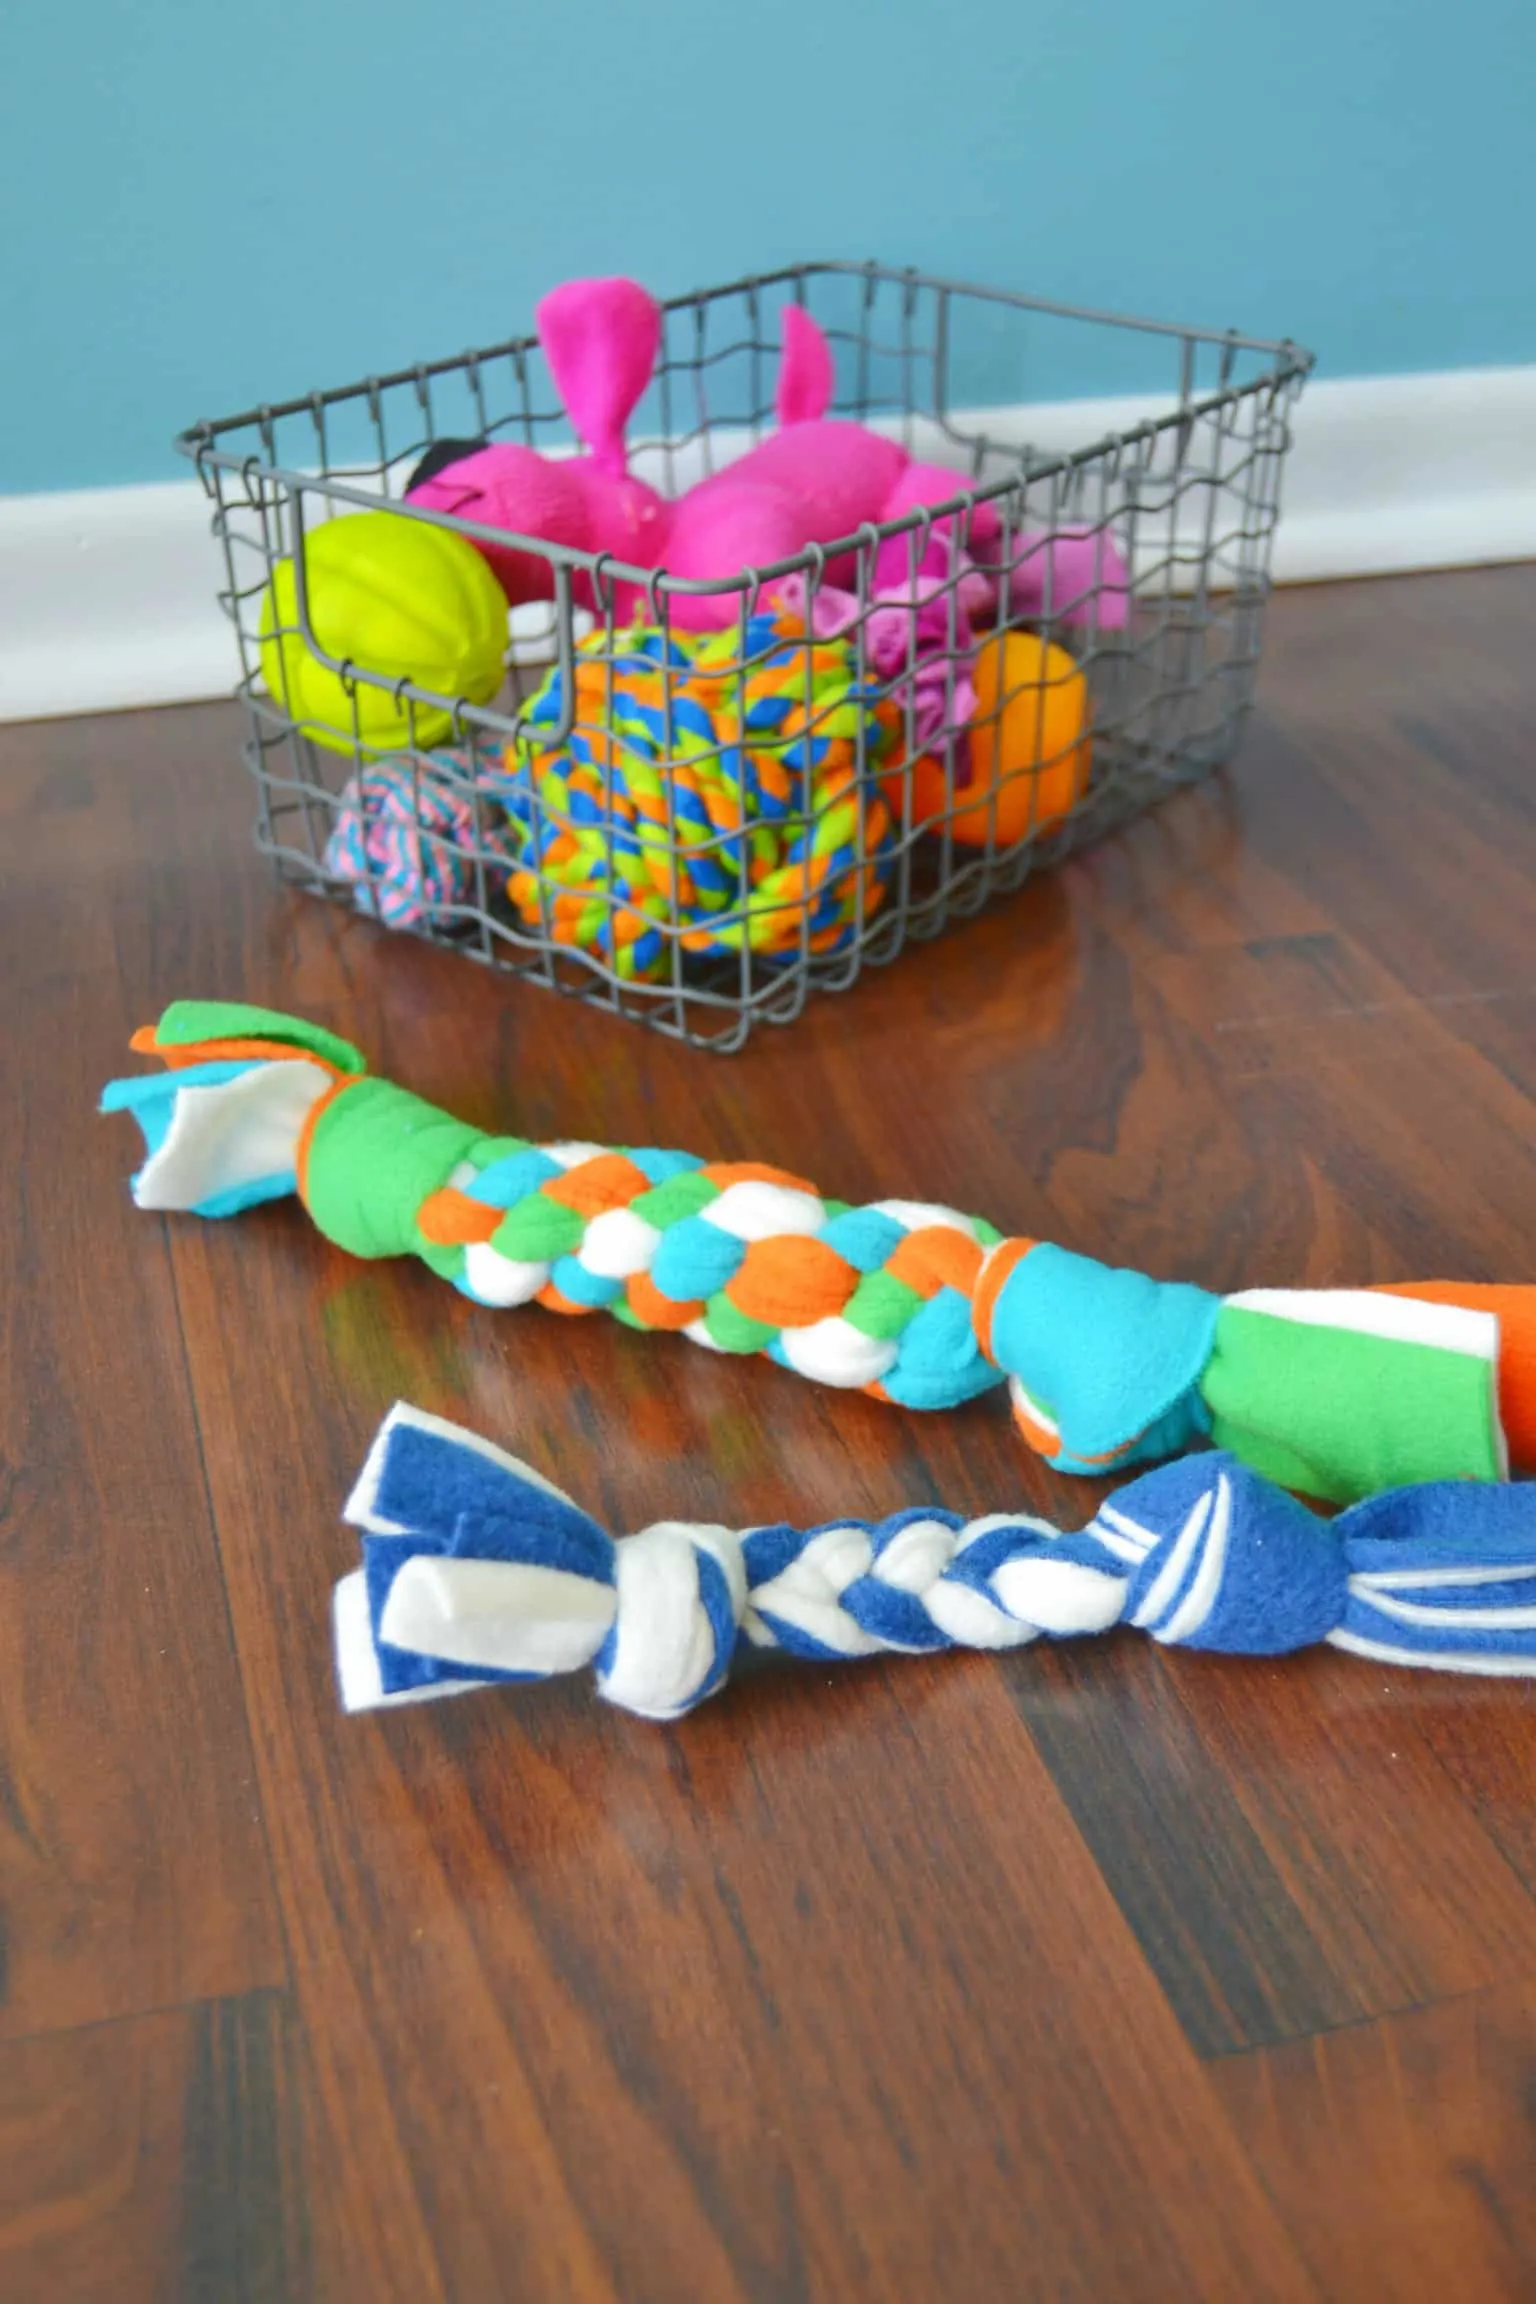 6. Square Knot Fleece Loop Dog Toy od Dalmatian DIY